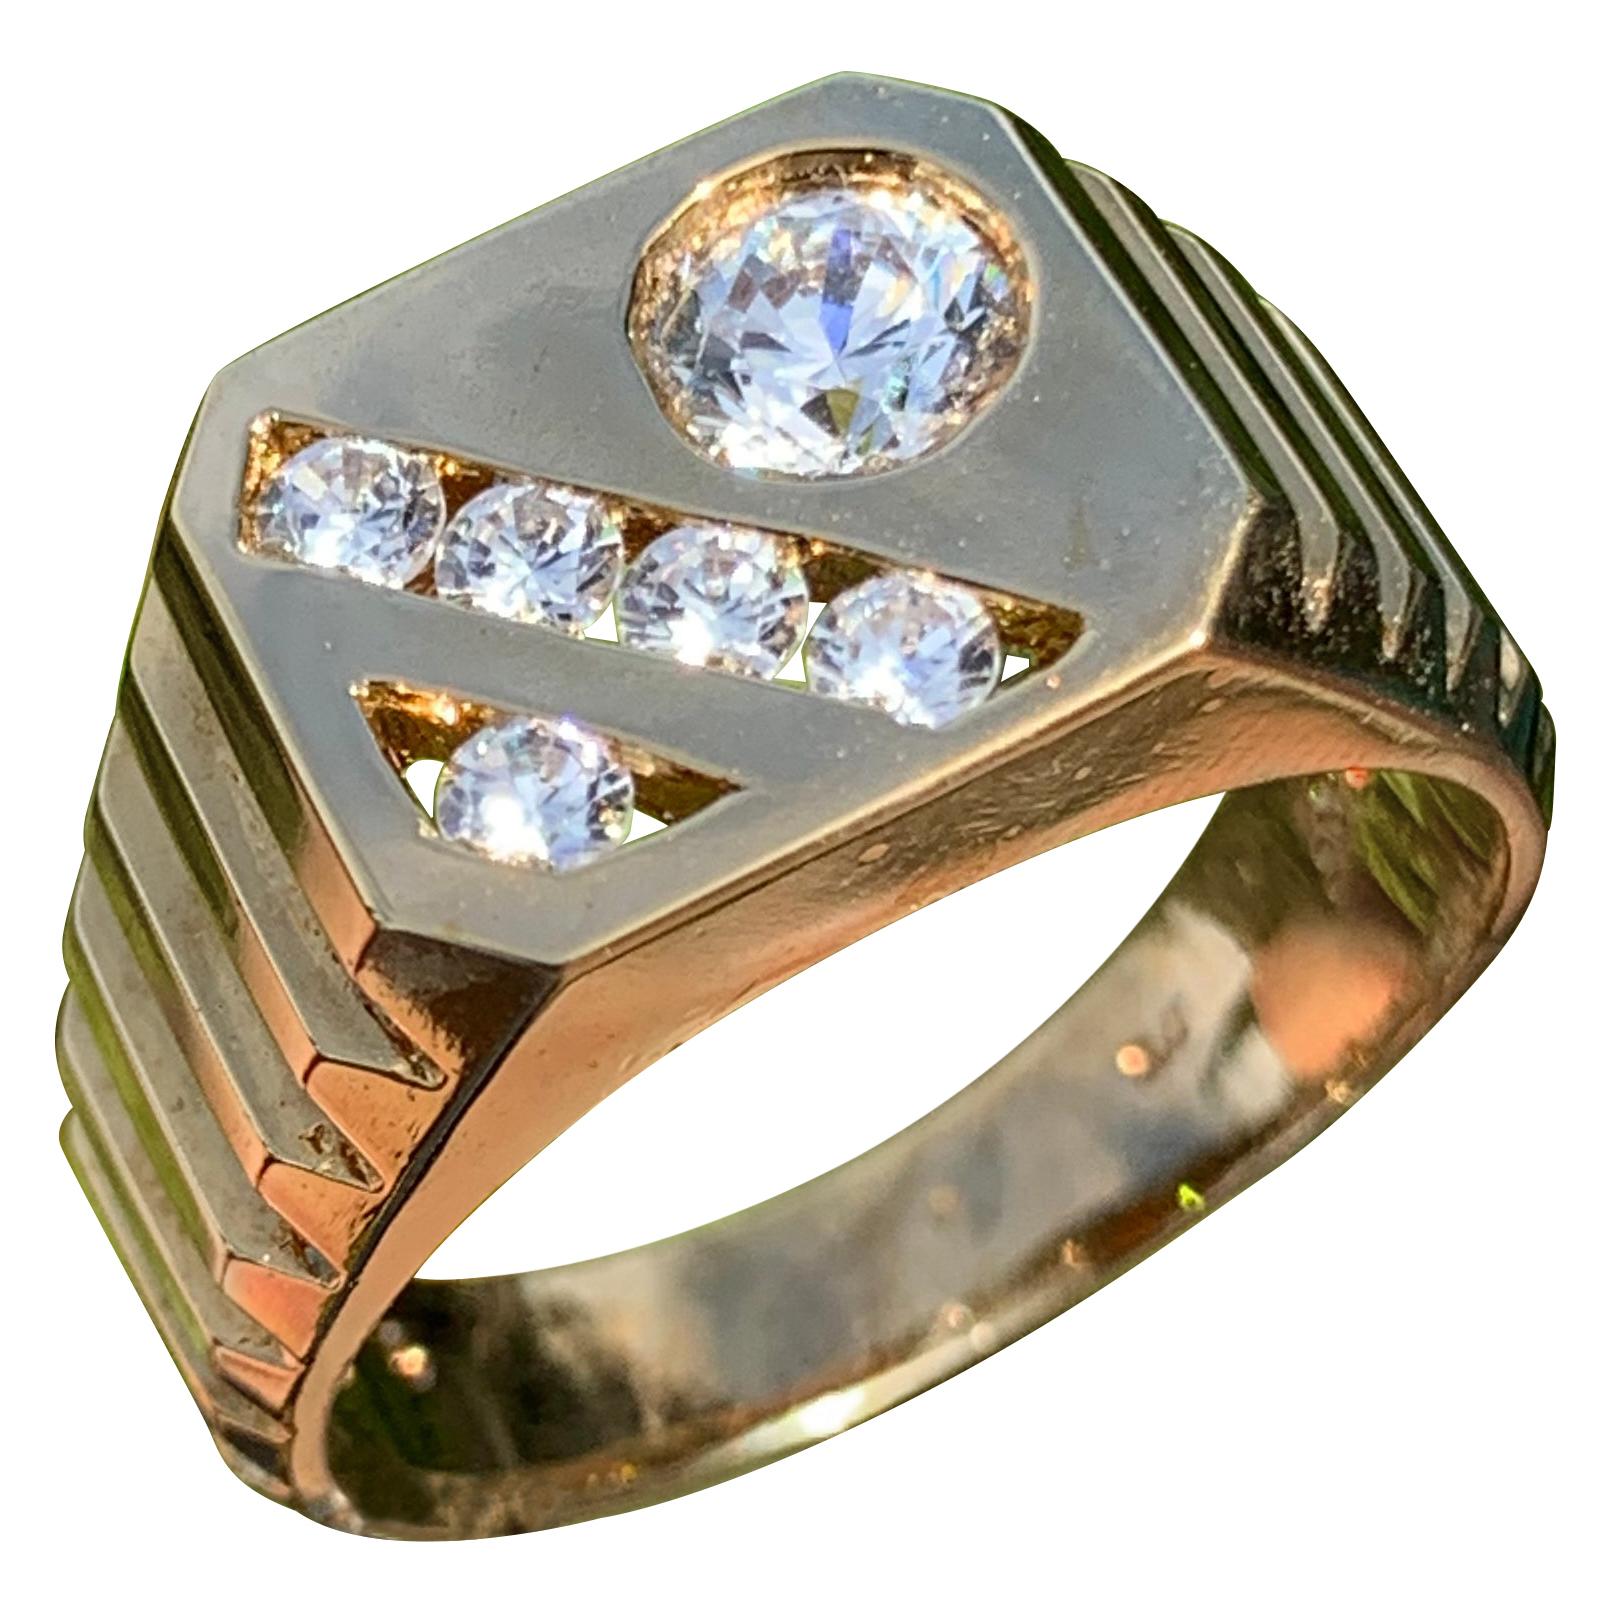 0.80 Carat Diamond Ring/Band, 10 Karat, 1980s Ben Dannie Original Design For Sale